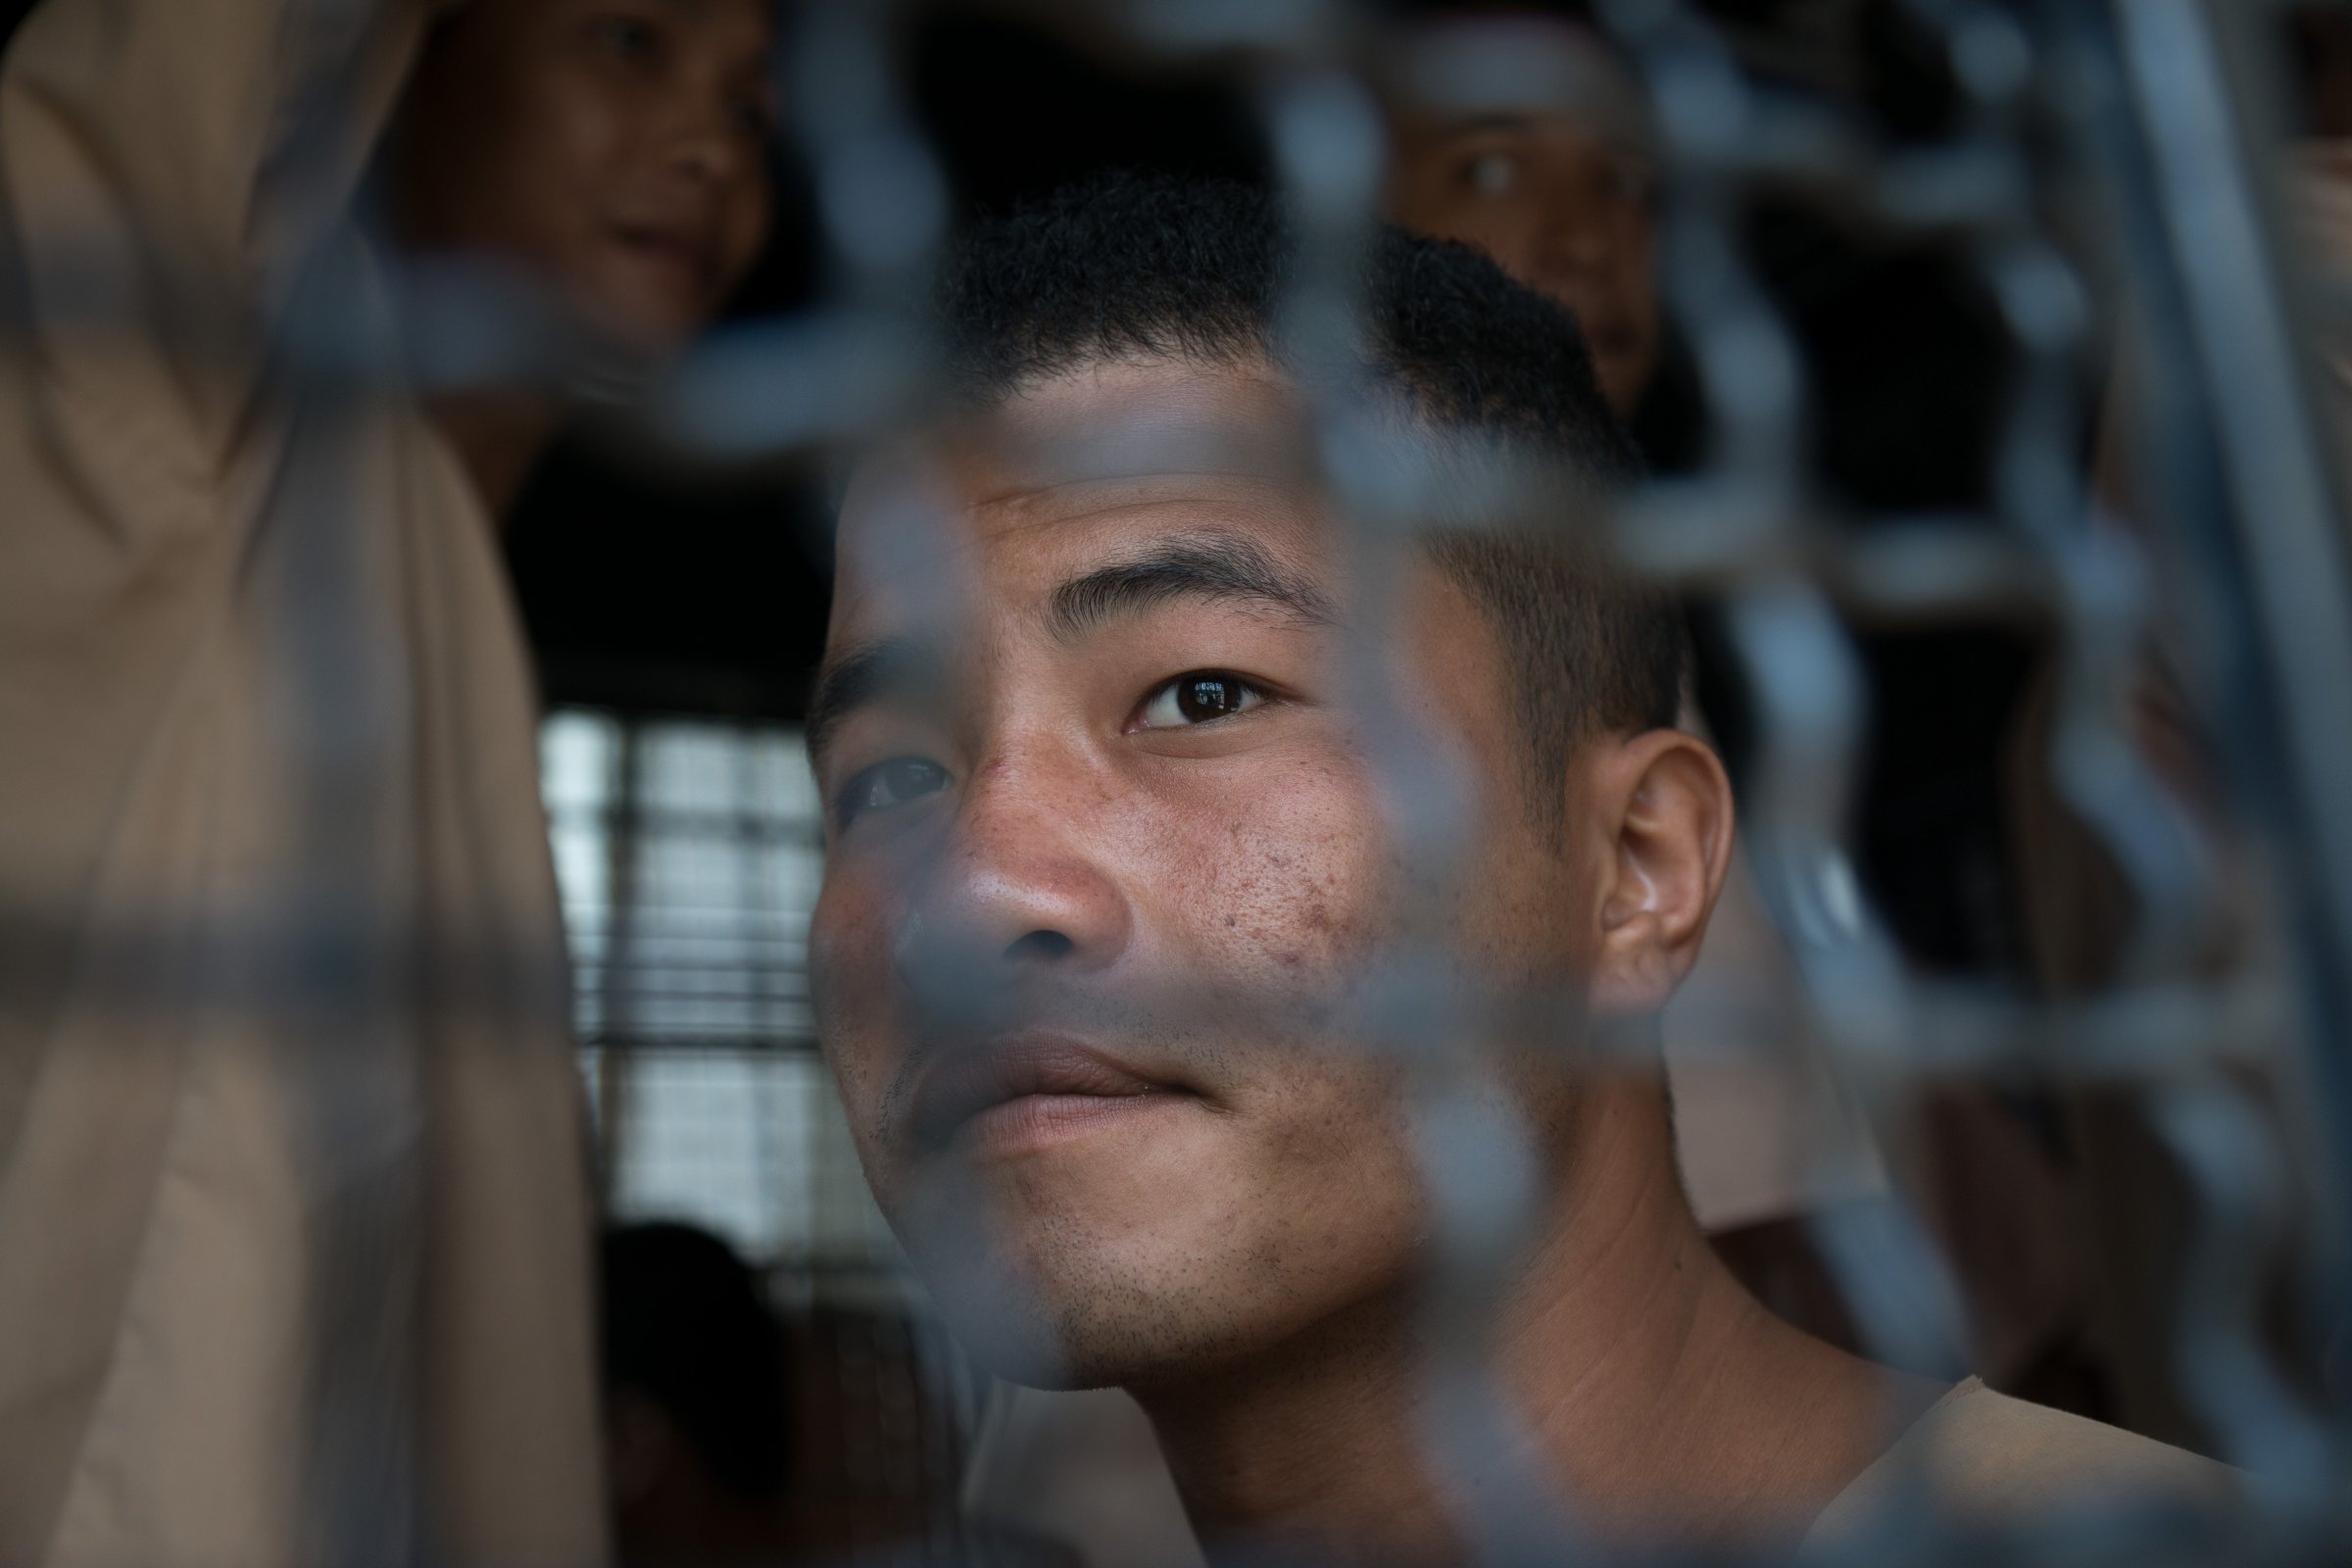 Myanmar national Zaw Lin looks on as he arrives in a prison transport van outside Koh Samui court on the Thai resort island of Koh Samui on July 9, 2015.